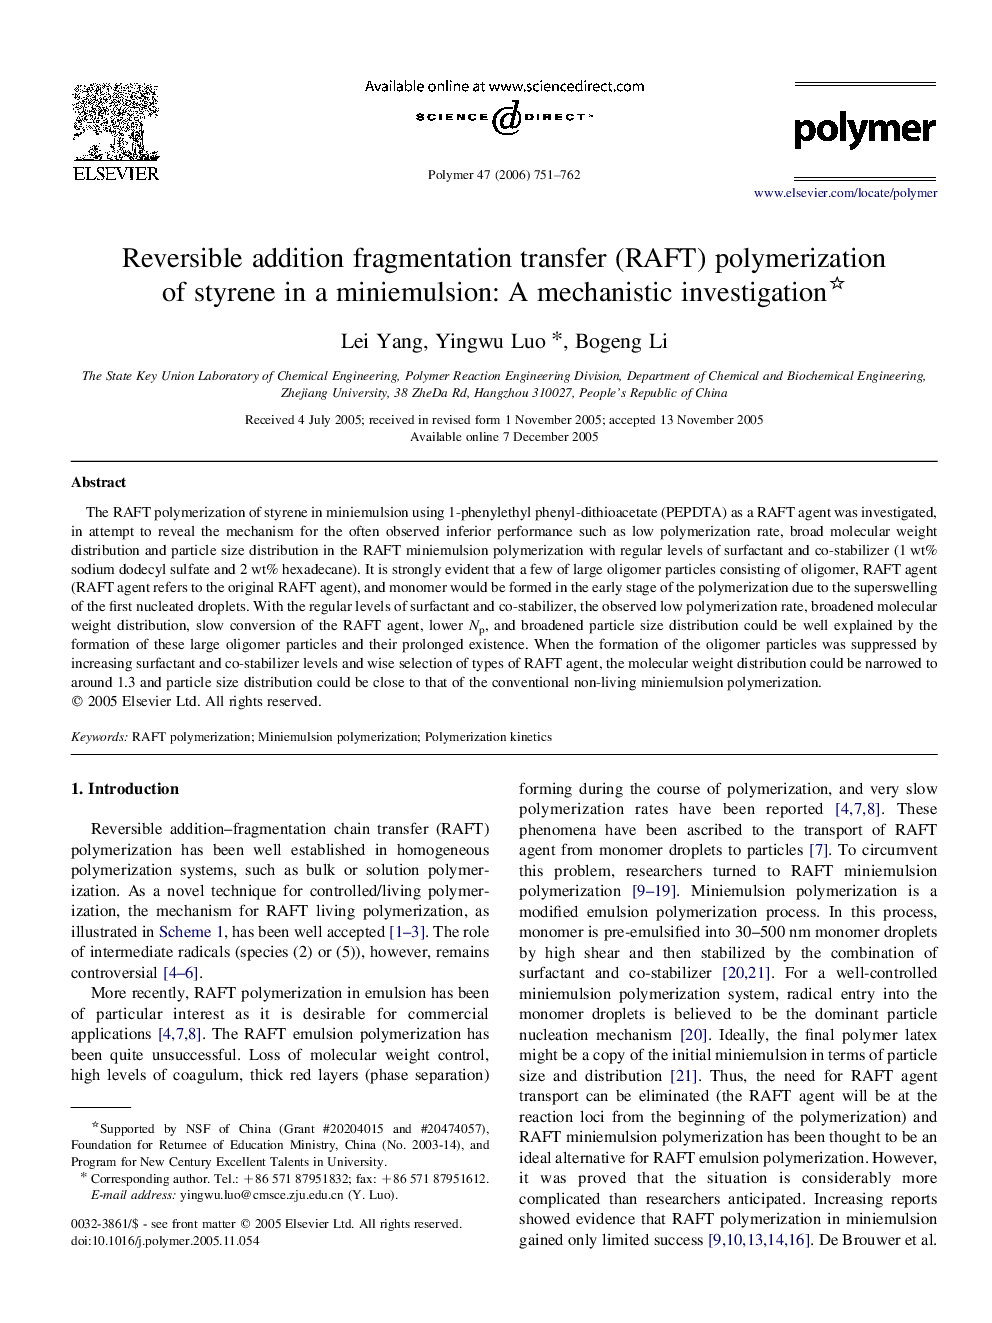 Reversible addition fragmentation transfer (RAFT) polymerization of styrene in a miniemulsion: A mechanistic investigation